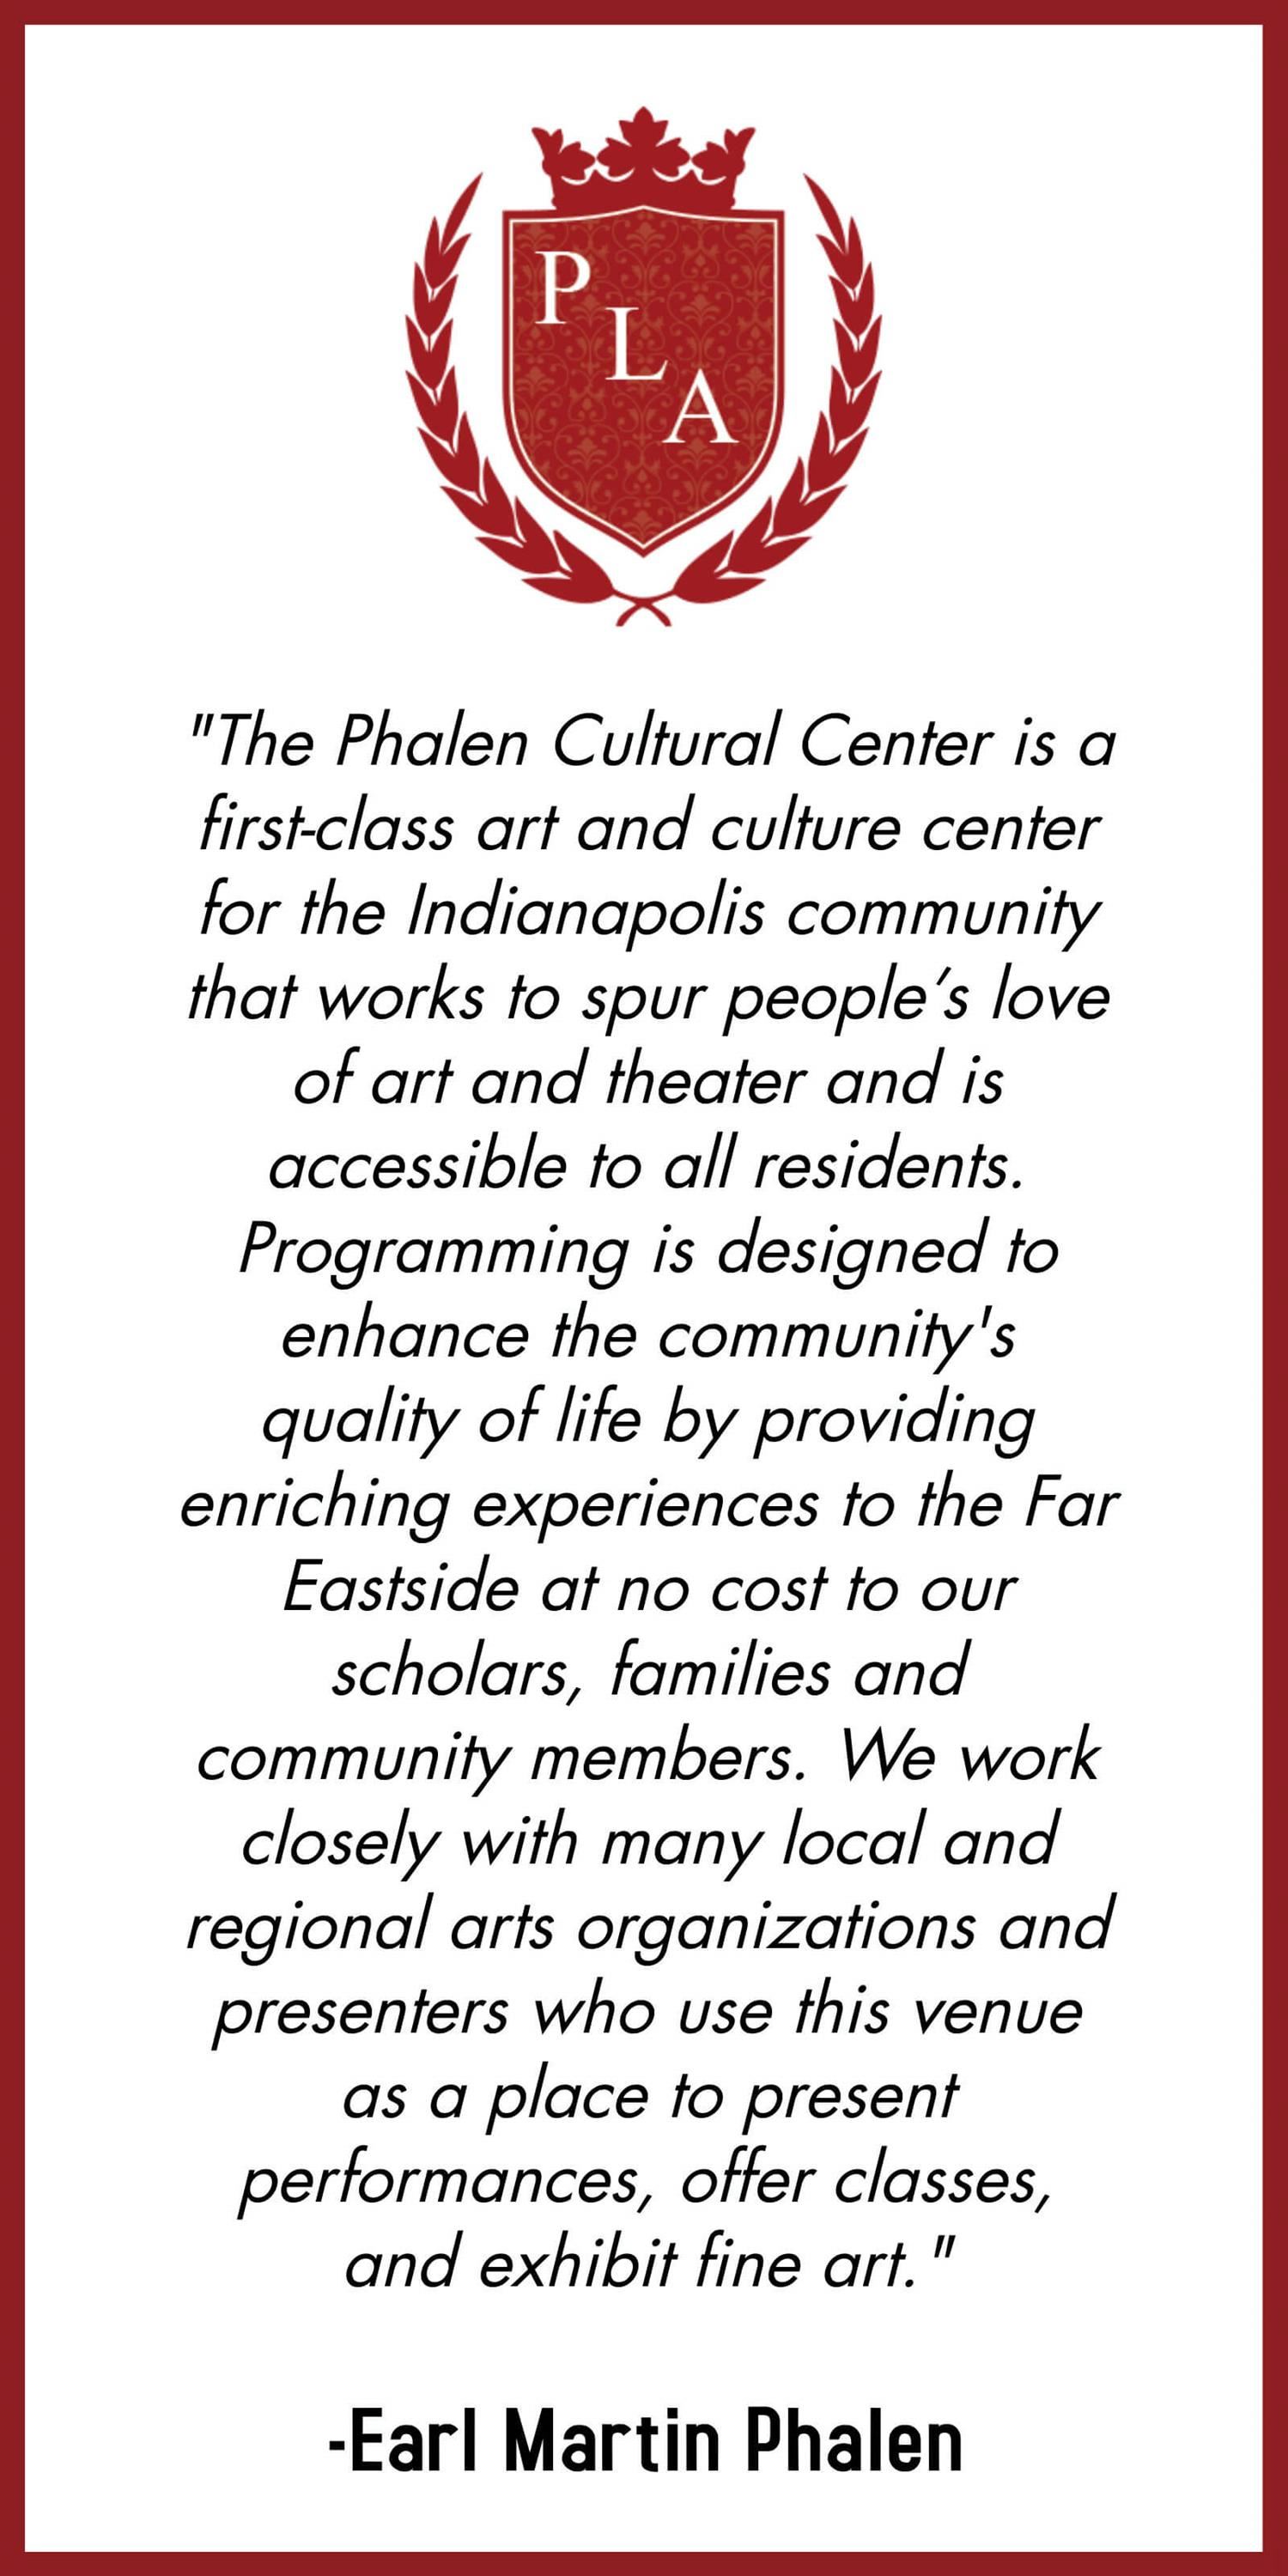 The Phalen Cultural Center